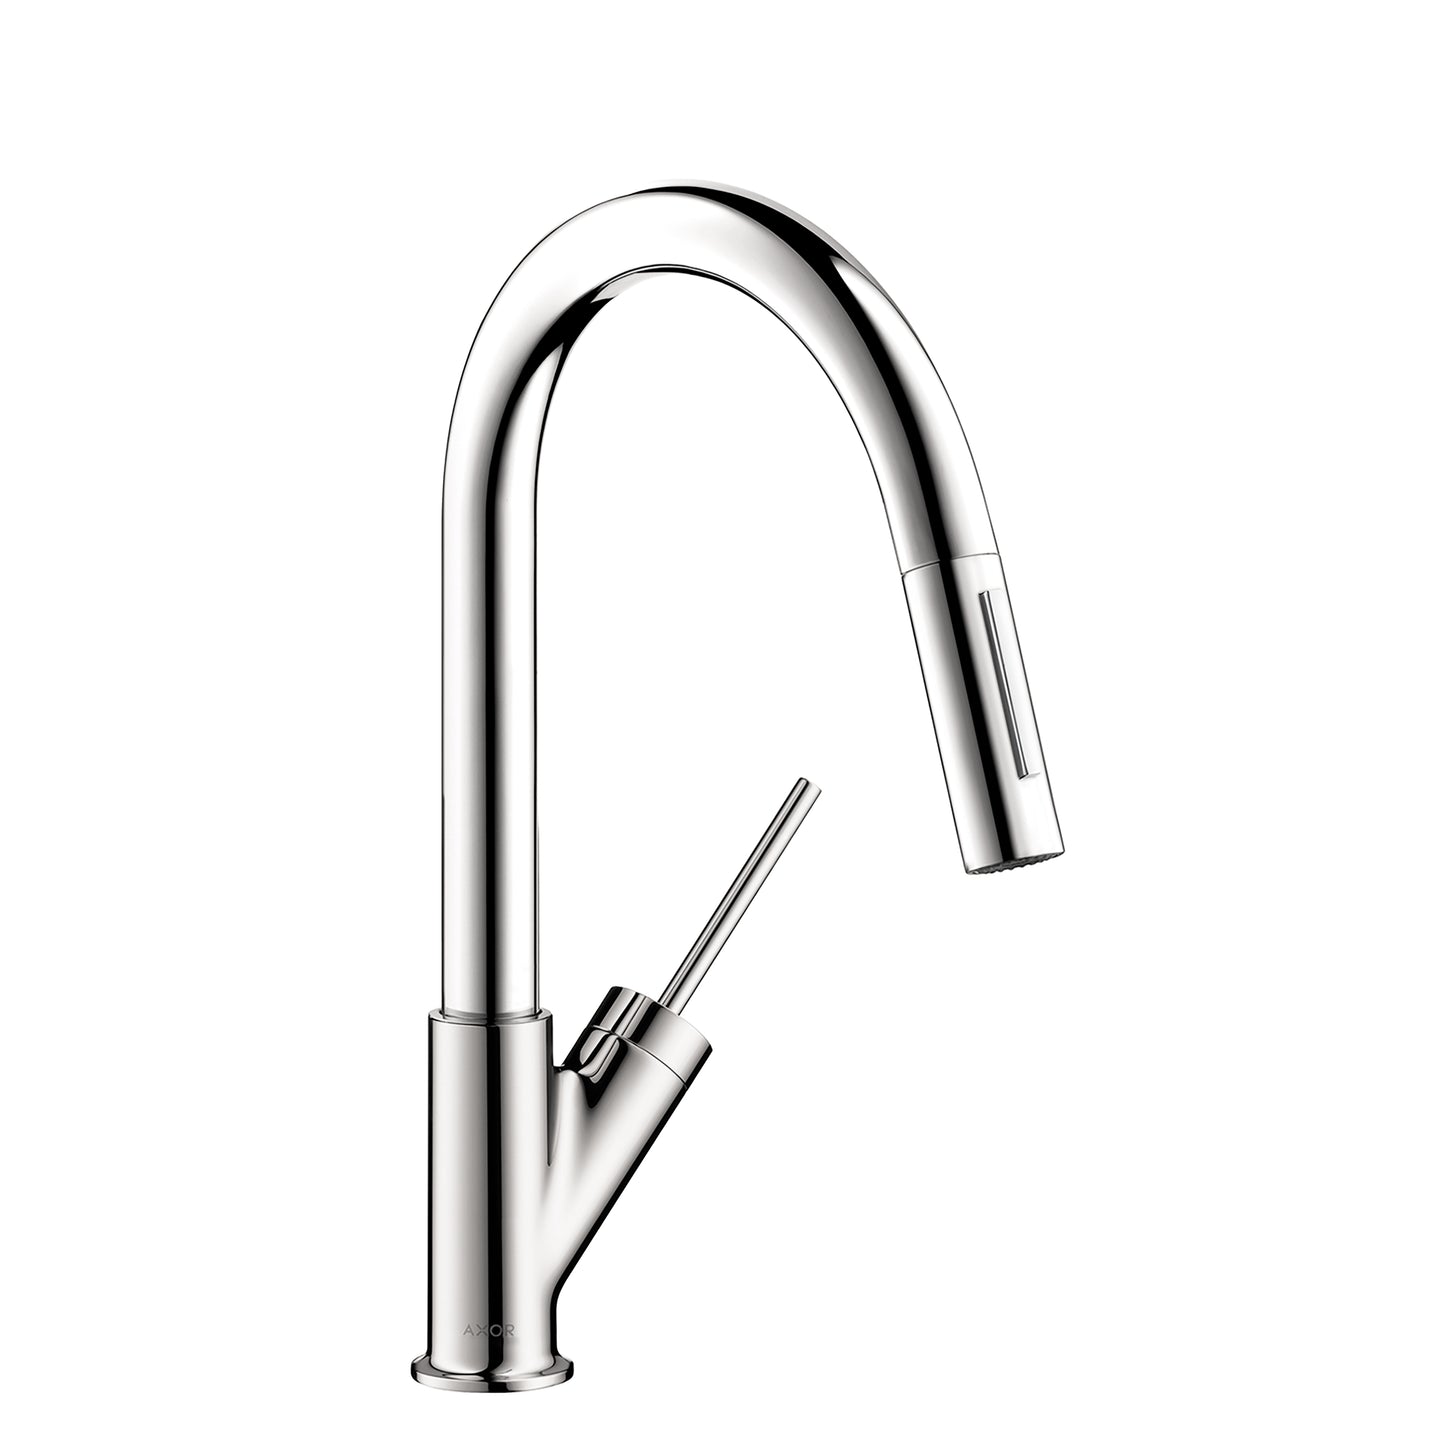 AXOR 10824001 Chrome Starck Modern Kitchen Faucet 1.75 GPM